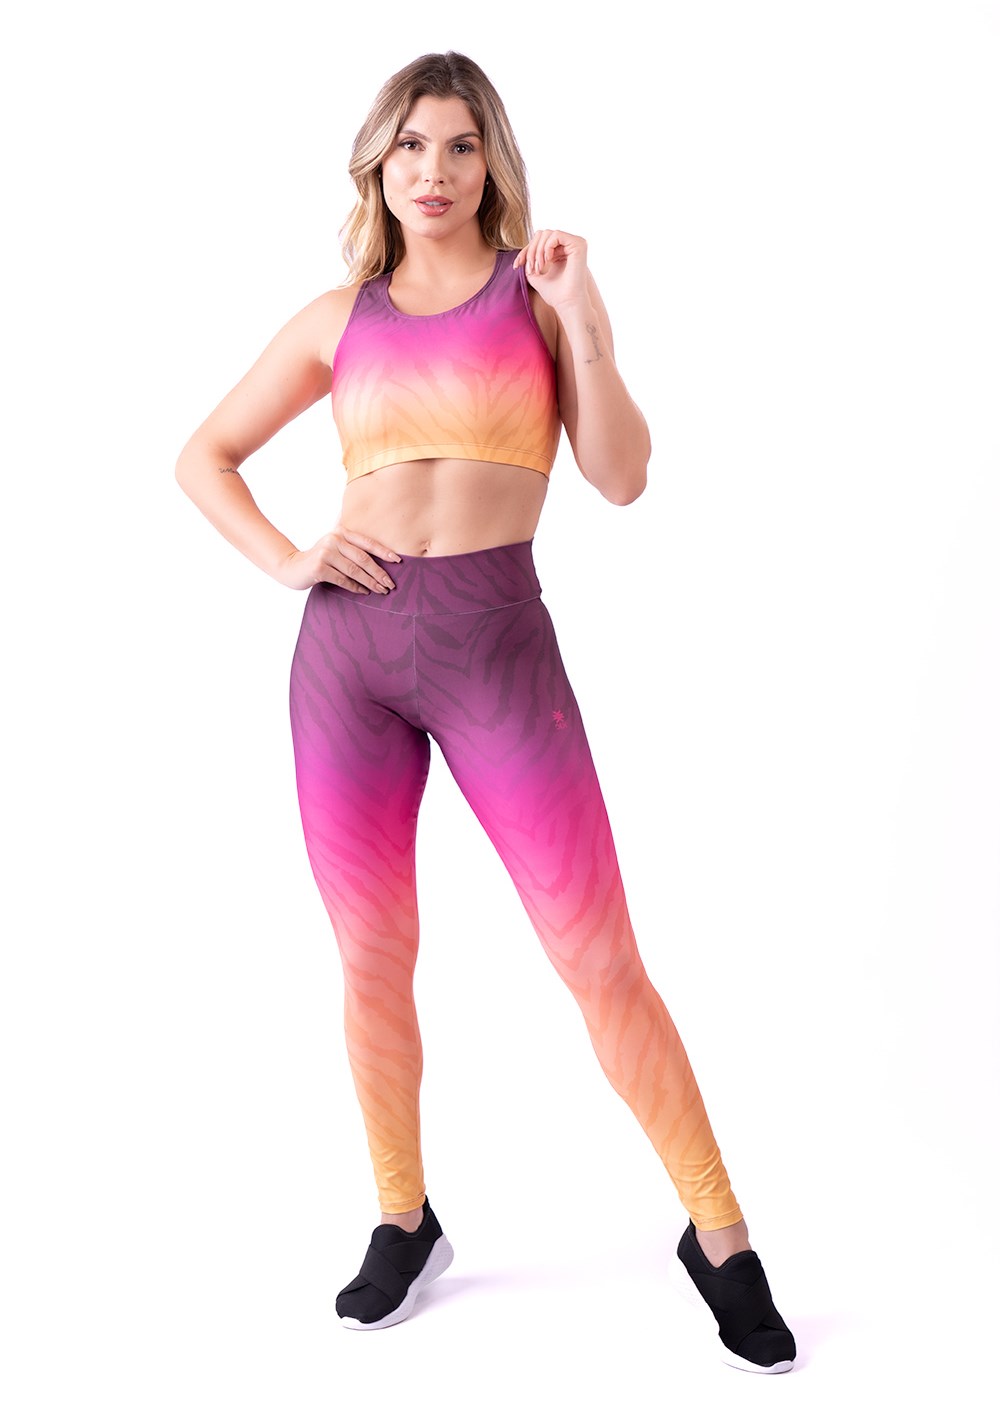 Legging fitness feminina new printed estampada mix zebra onça rosa